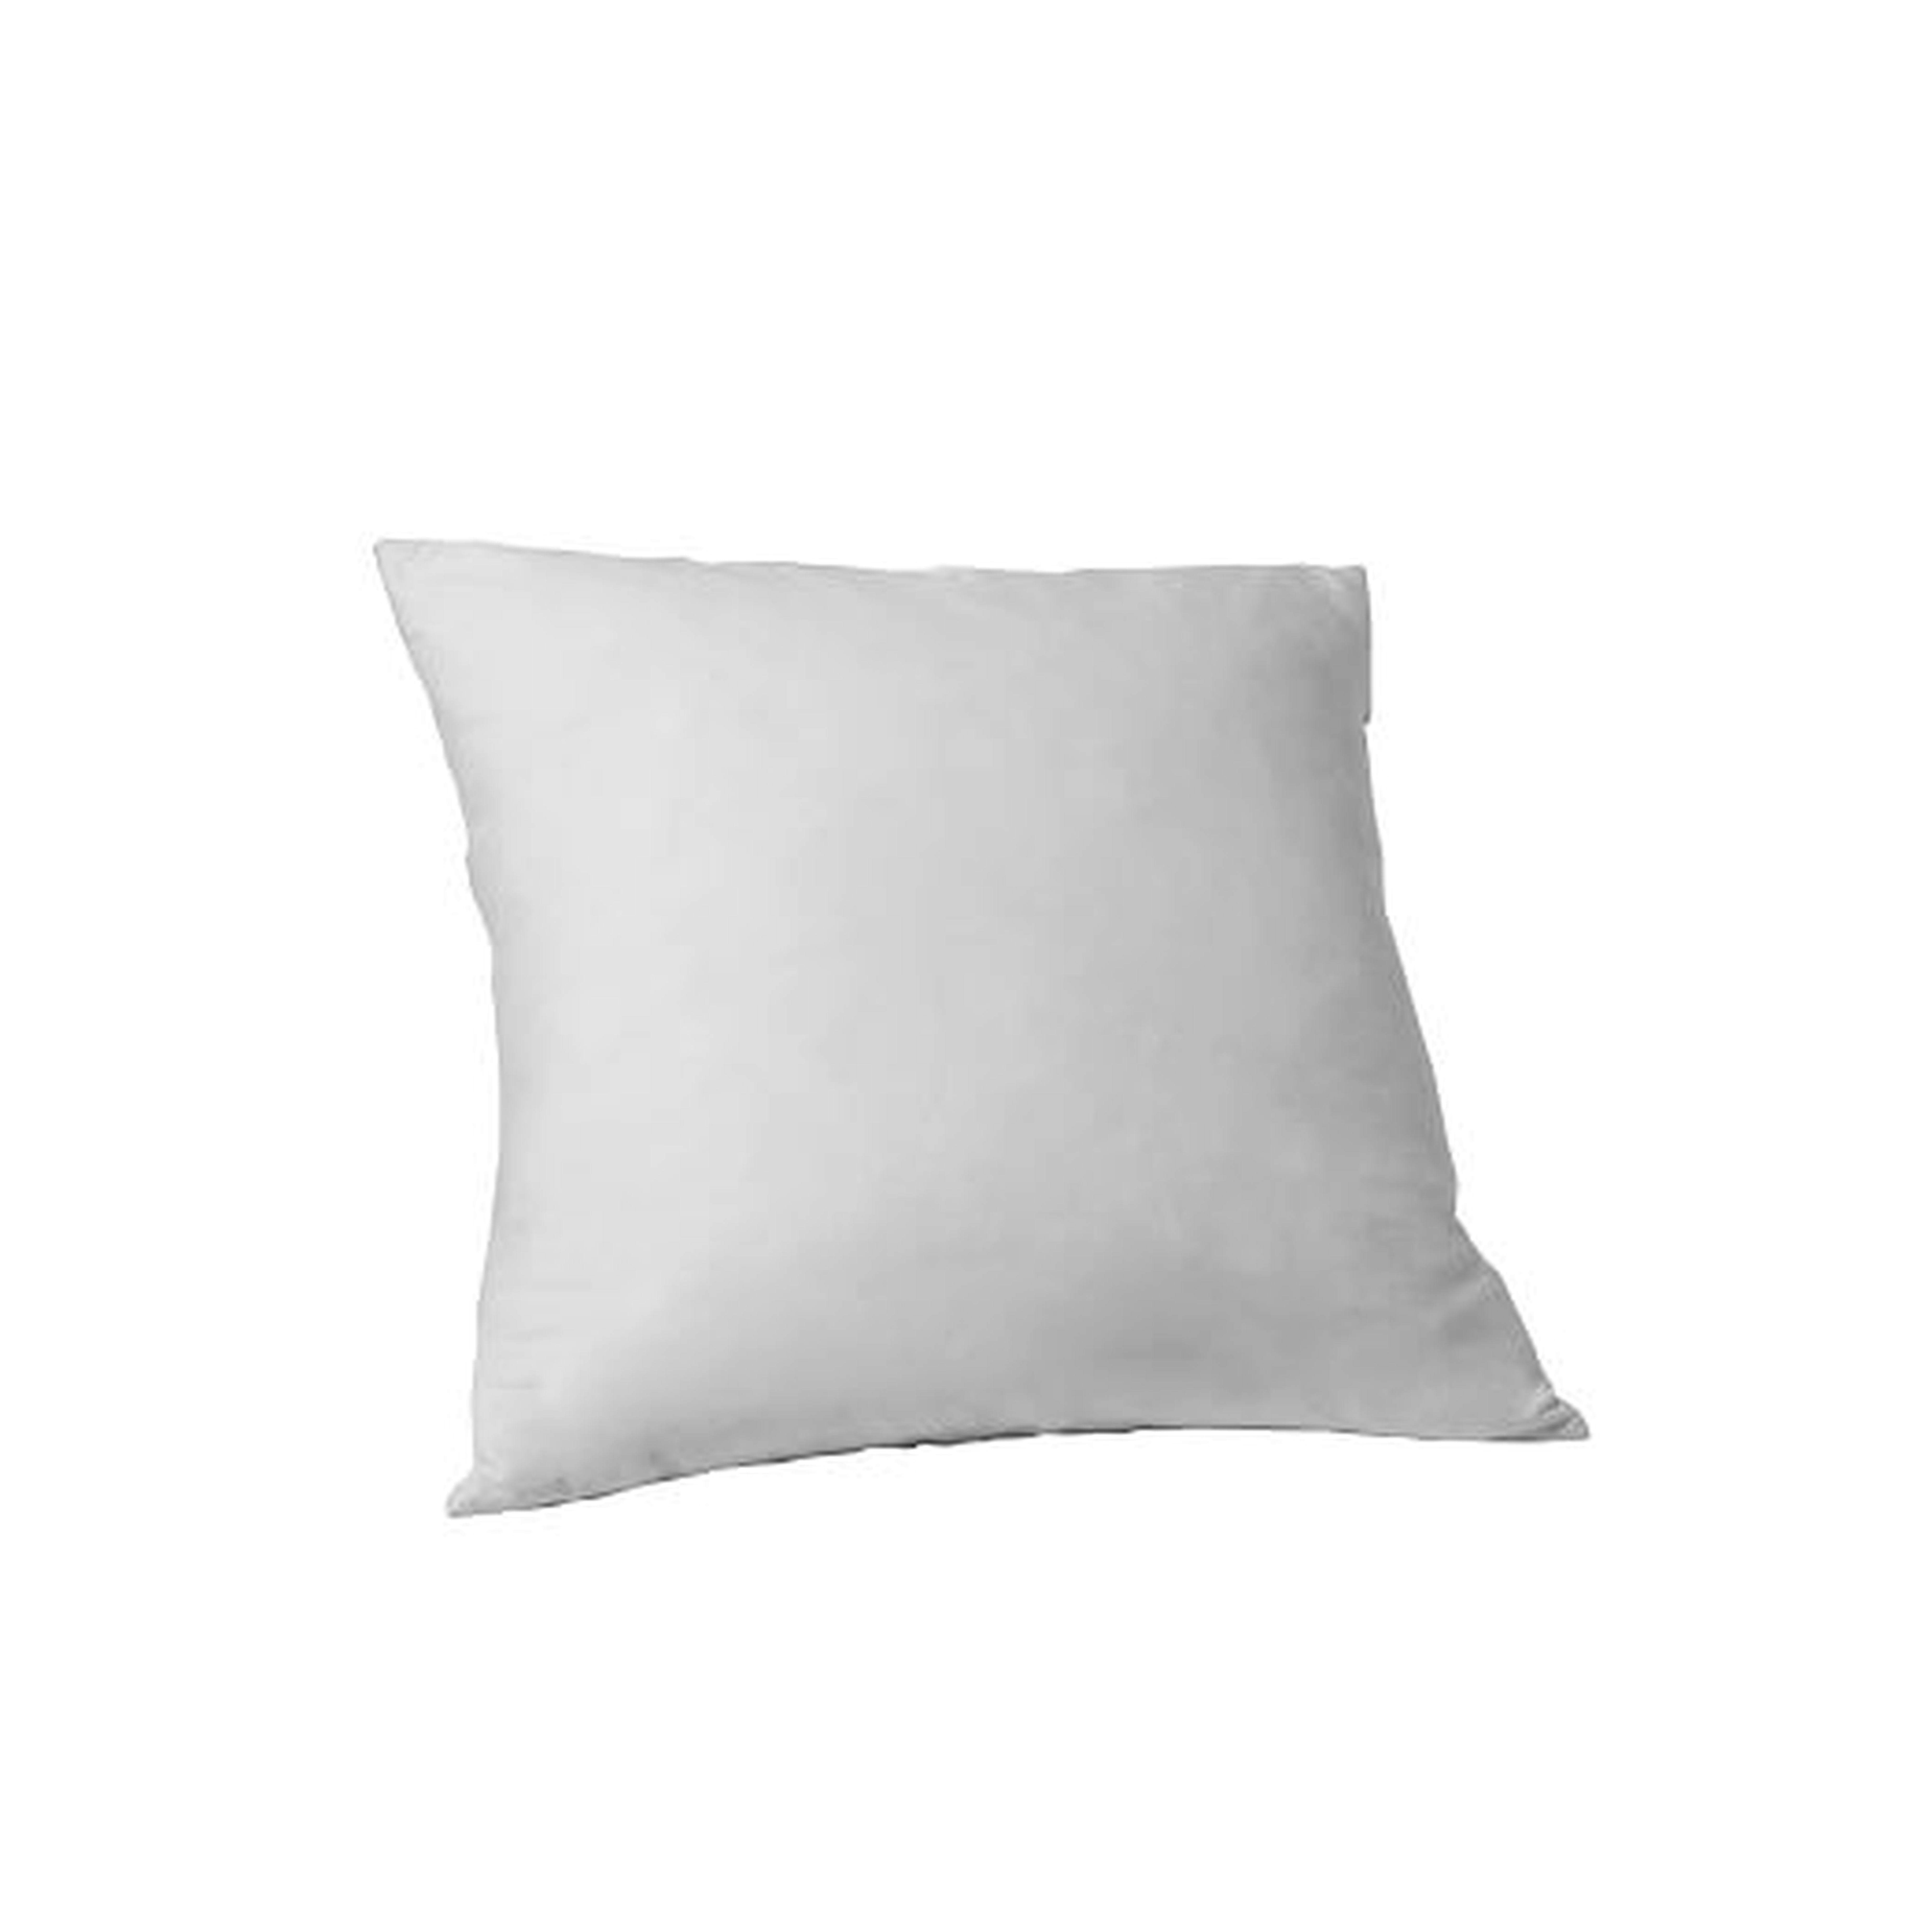 Decorative Pillow Insert - 18x18" - Poly Fiber - West Elm